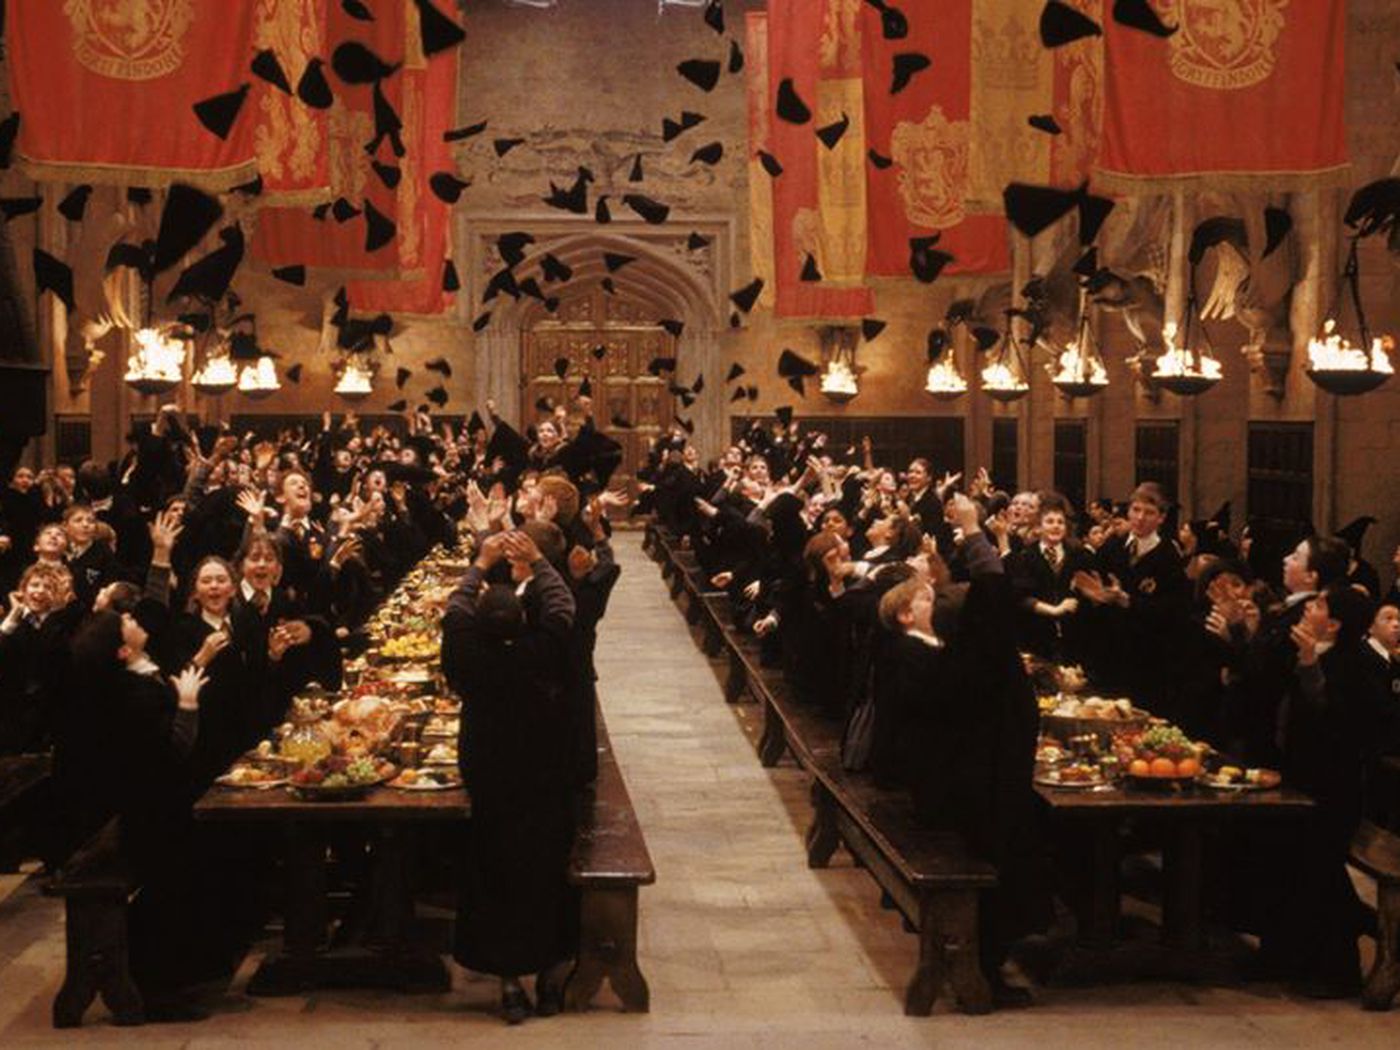 An online Hogwarts escape room has been designed for Harry Potter fans, The Manc